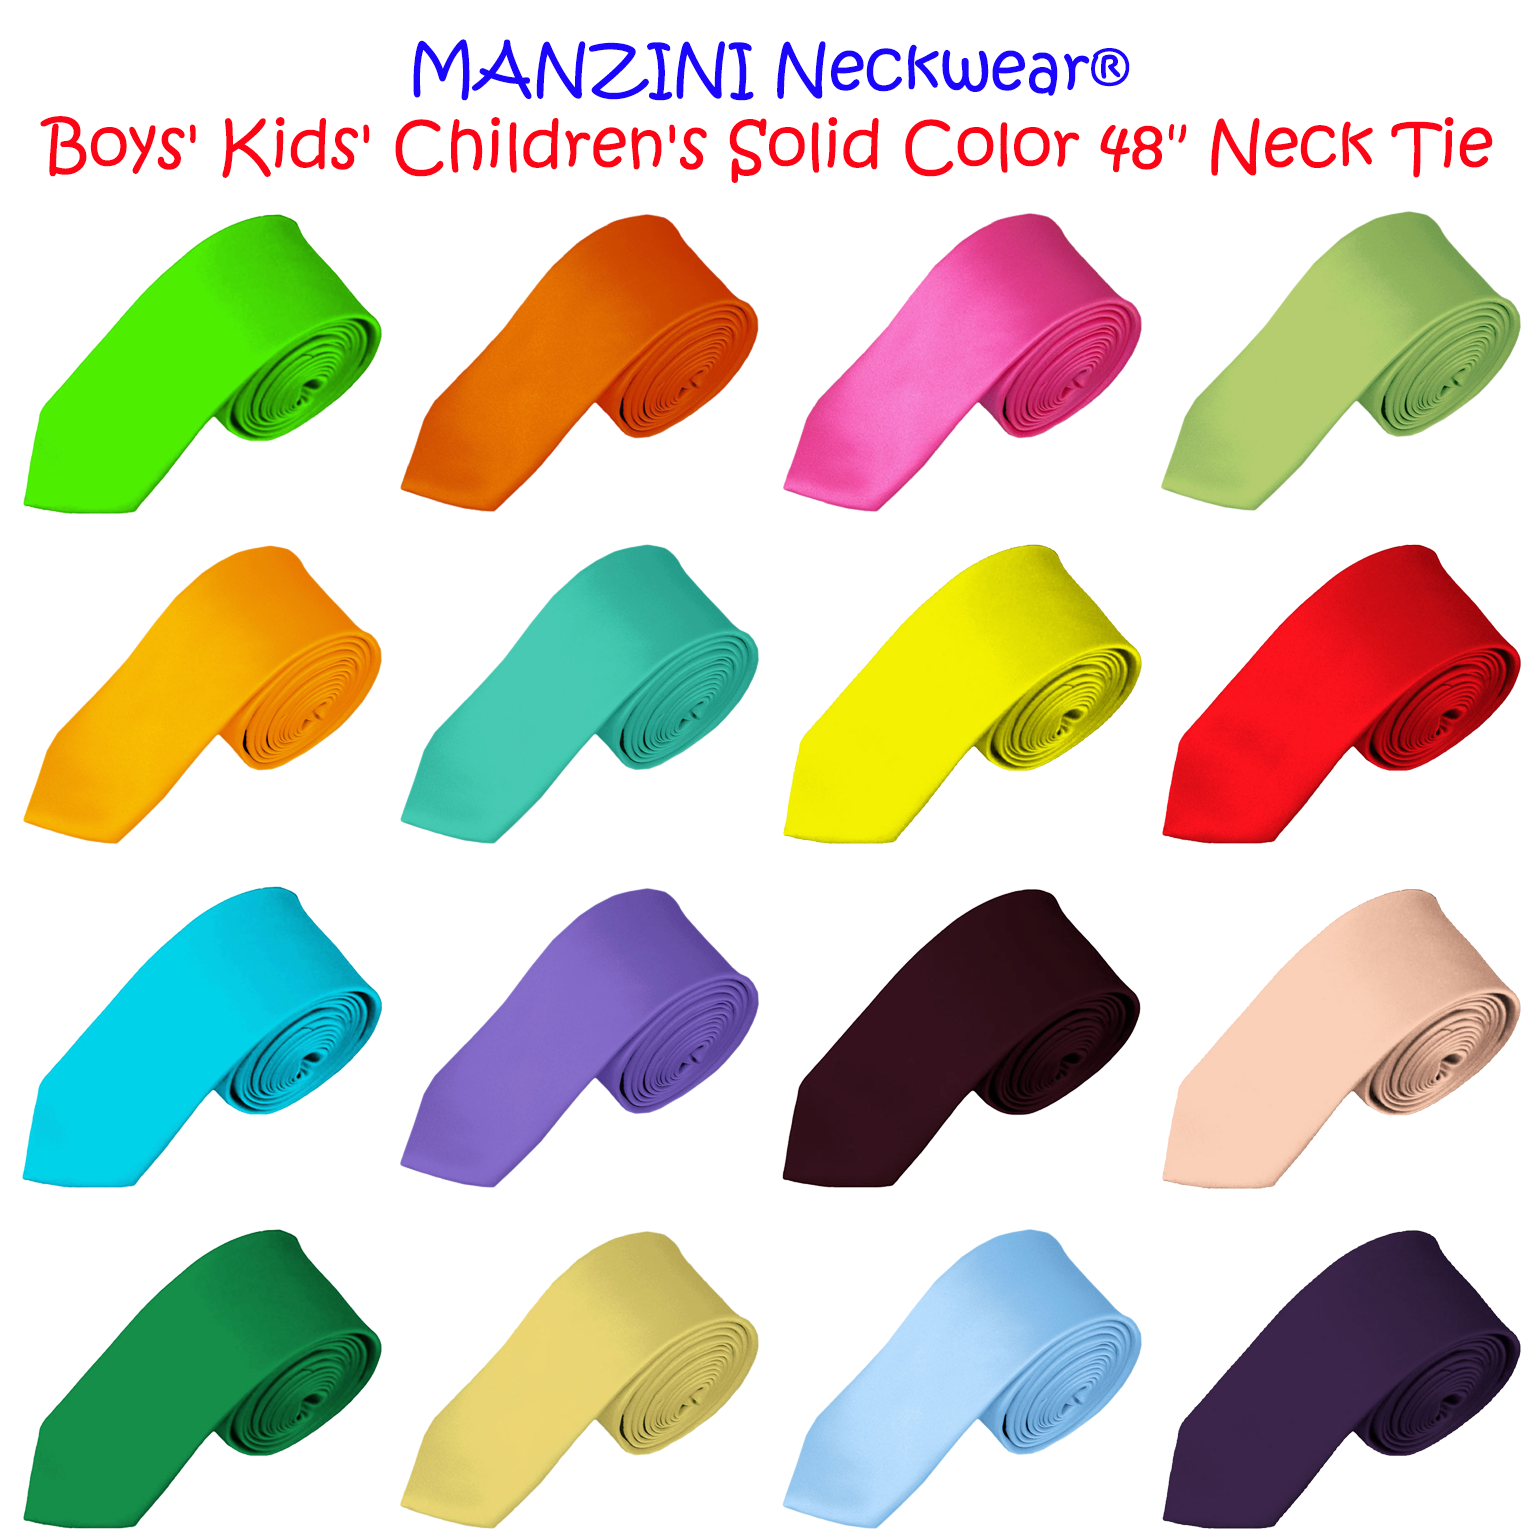 NYFASHION101® Manzini Neckwear® Boys' Kids' Children's Solid Color 48" Neck Tie Manzini Neckwear®